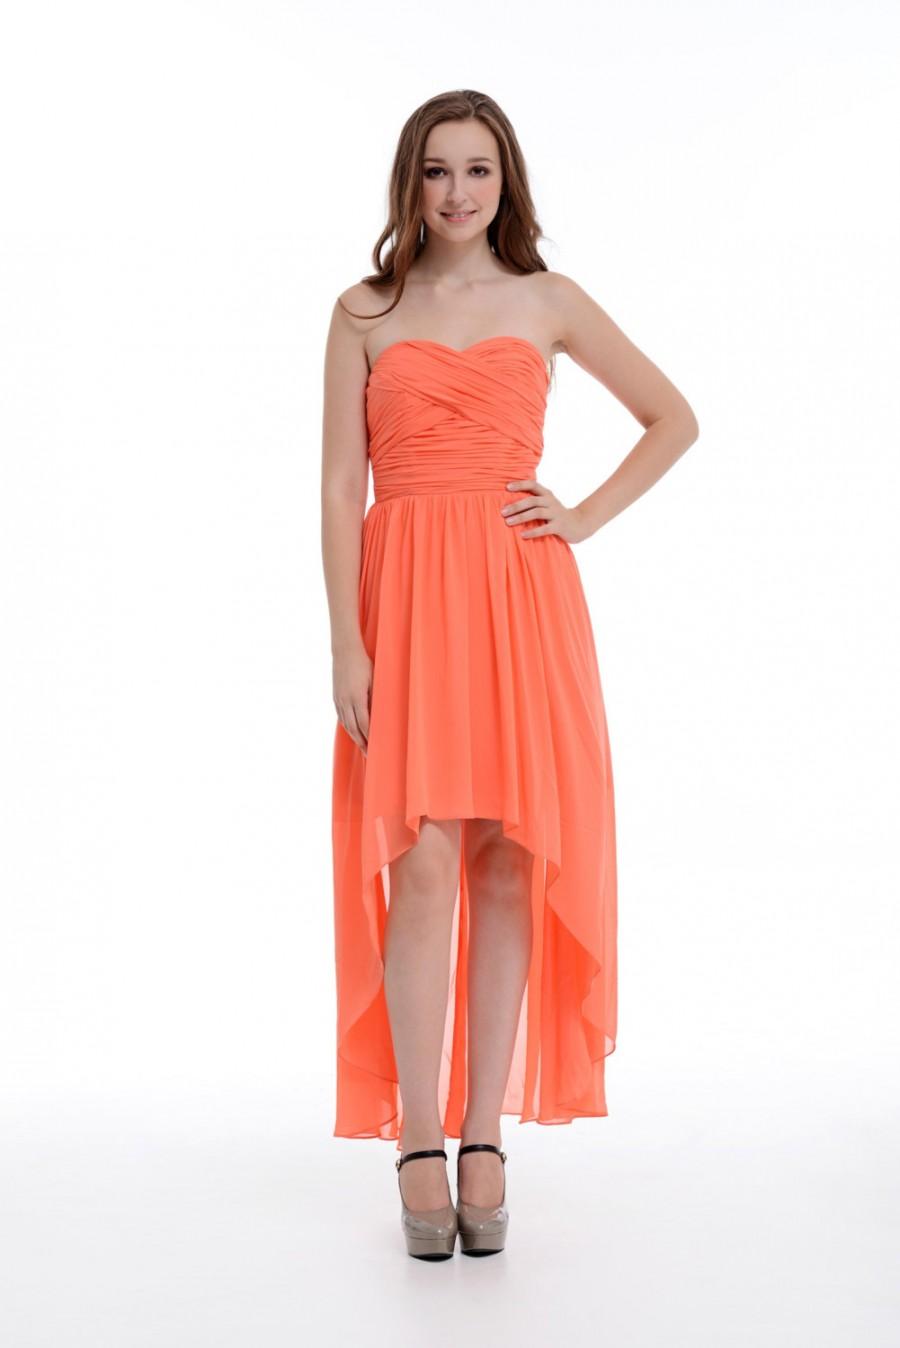 Wedding - Coral High-Low Sweetheart Peach Chiffon Bridesmaid Dress, Asymmetrical Chiffon Dress With Ruffle